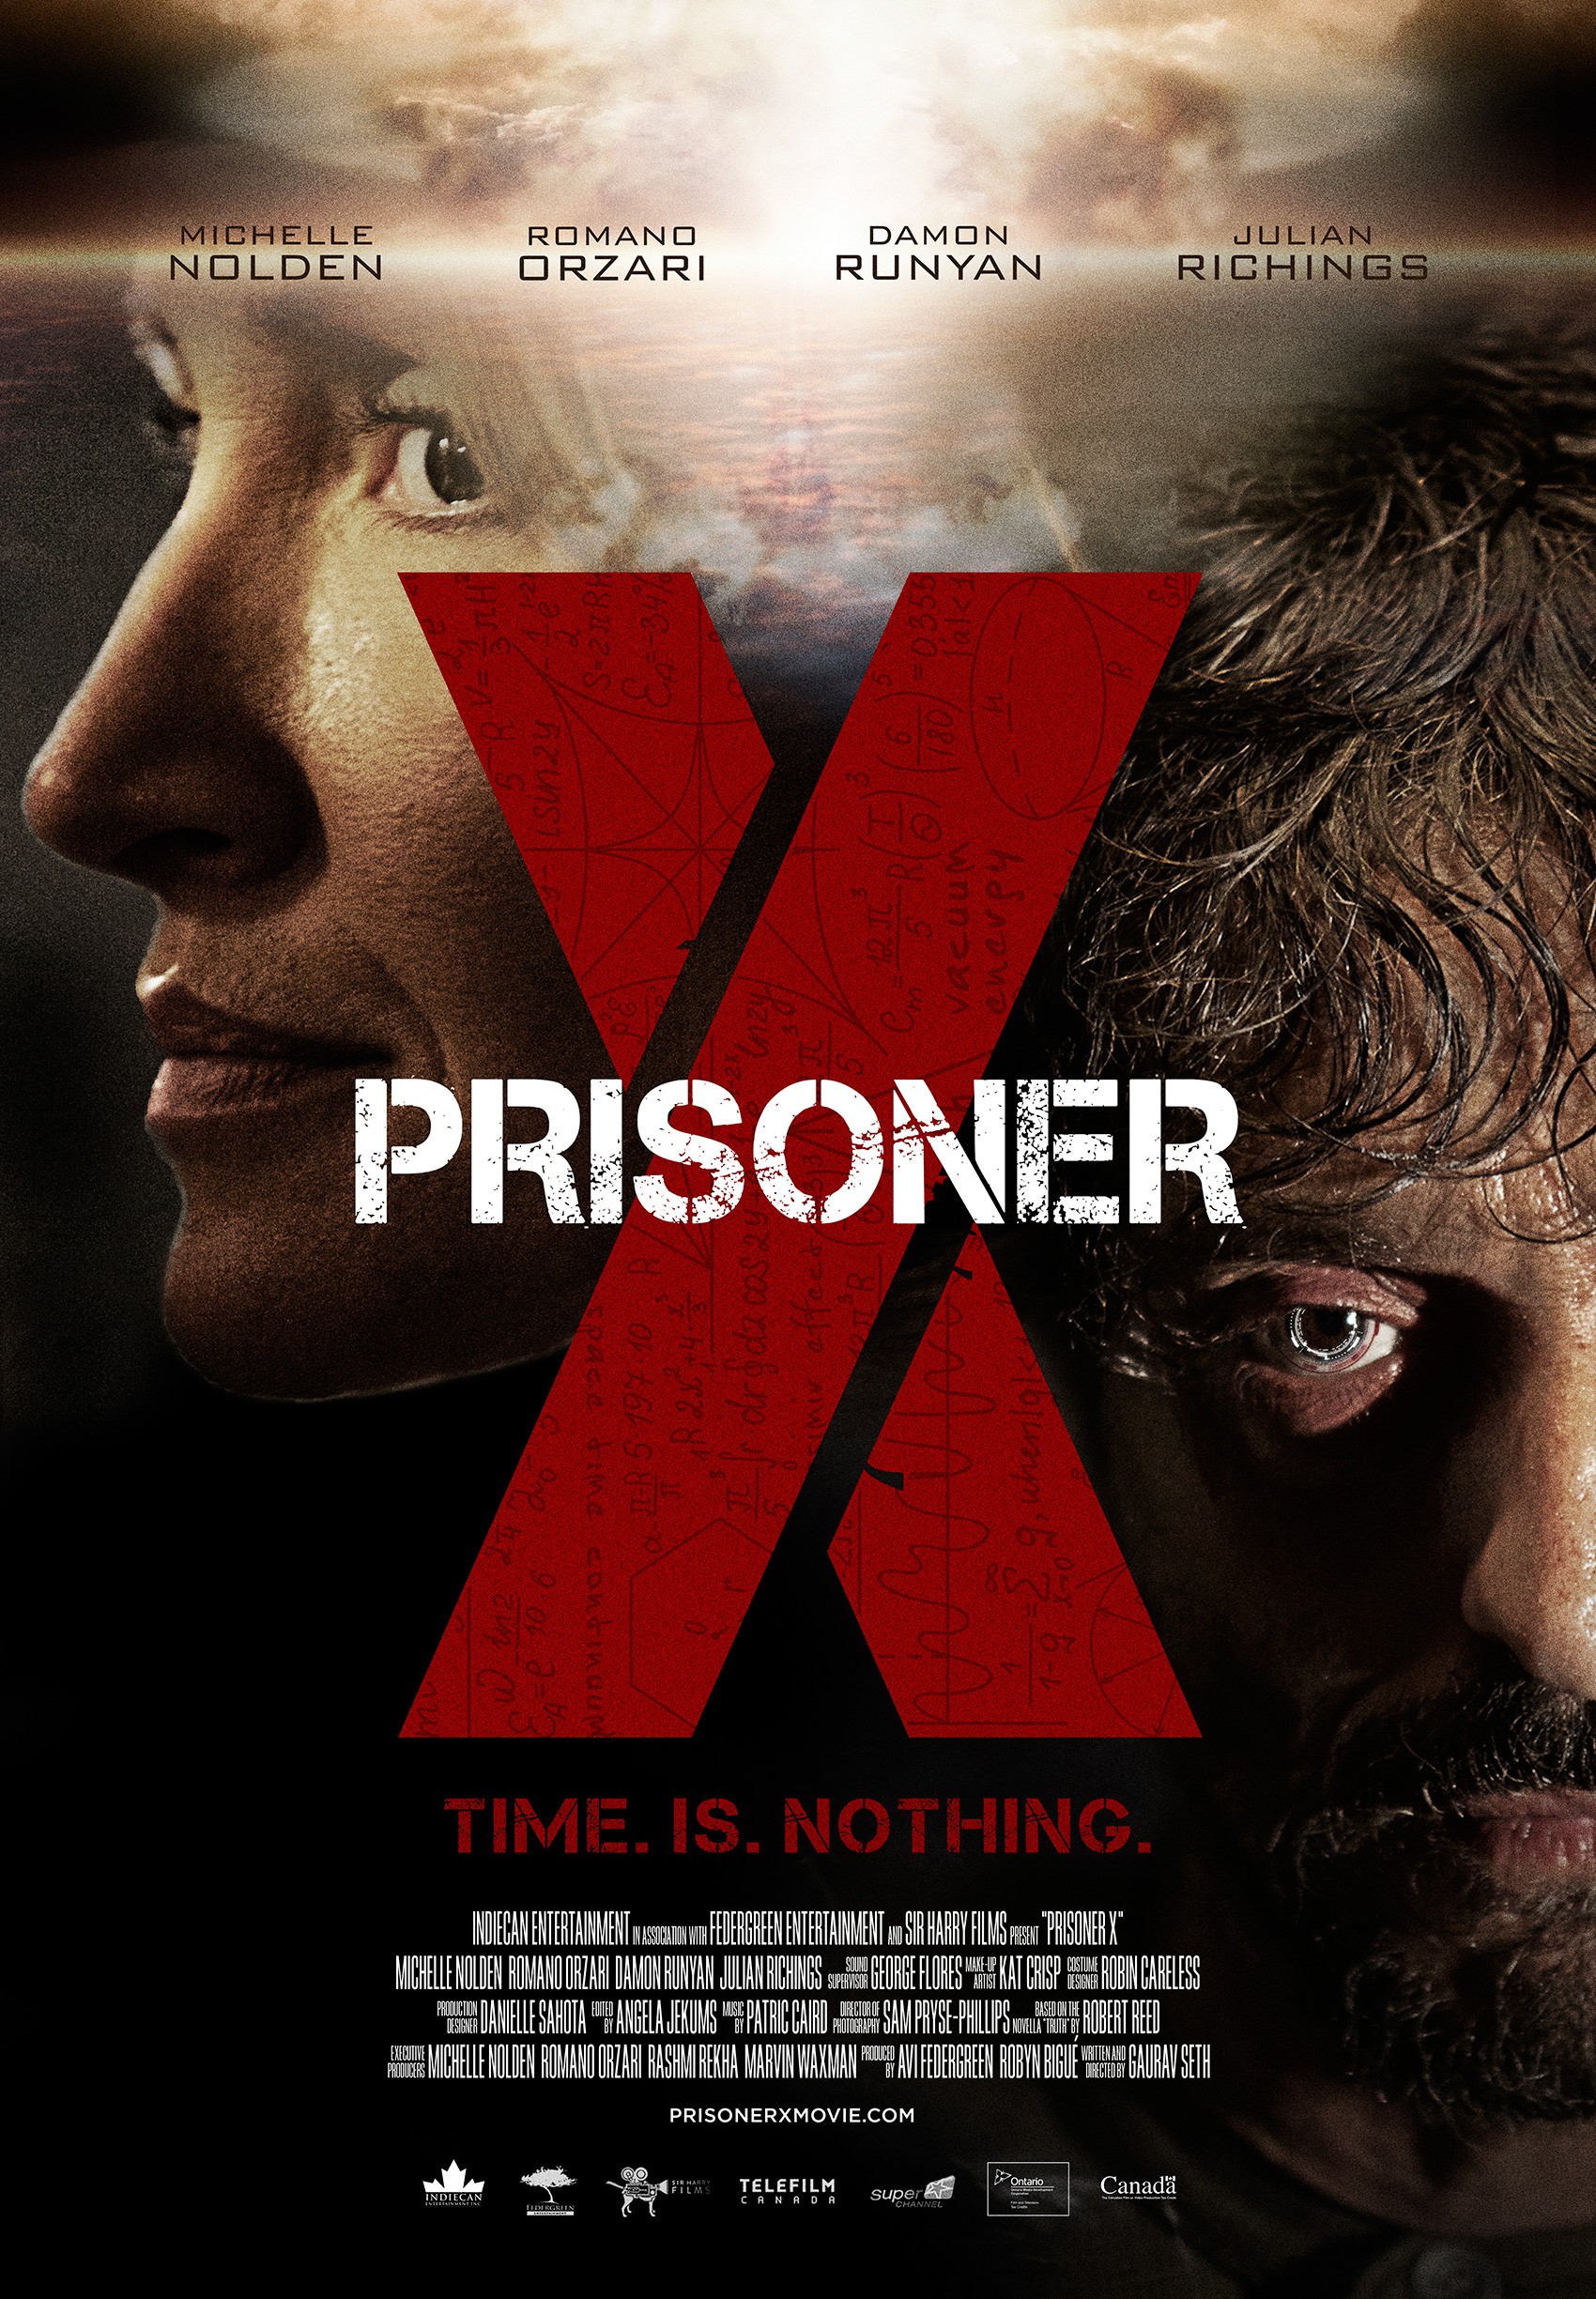 Mega Sized Movie Poster Image for Prisoner X 